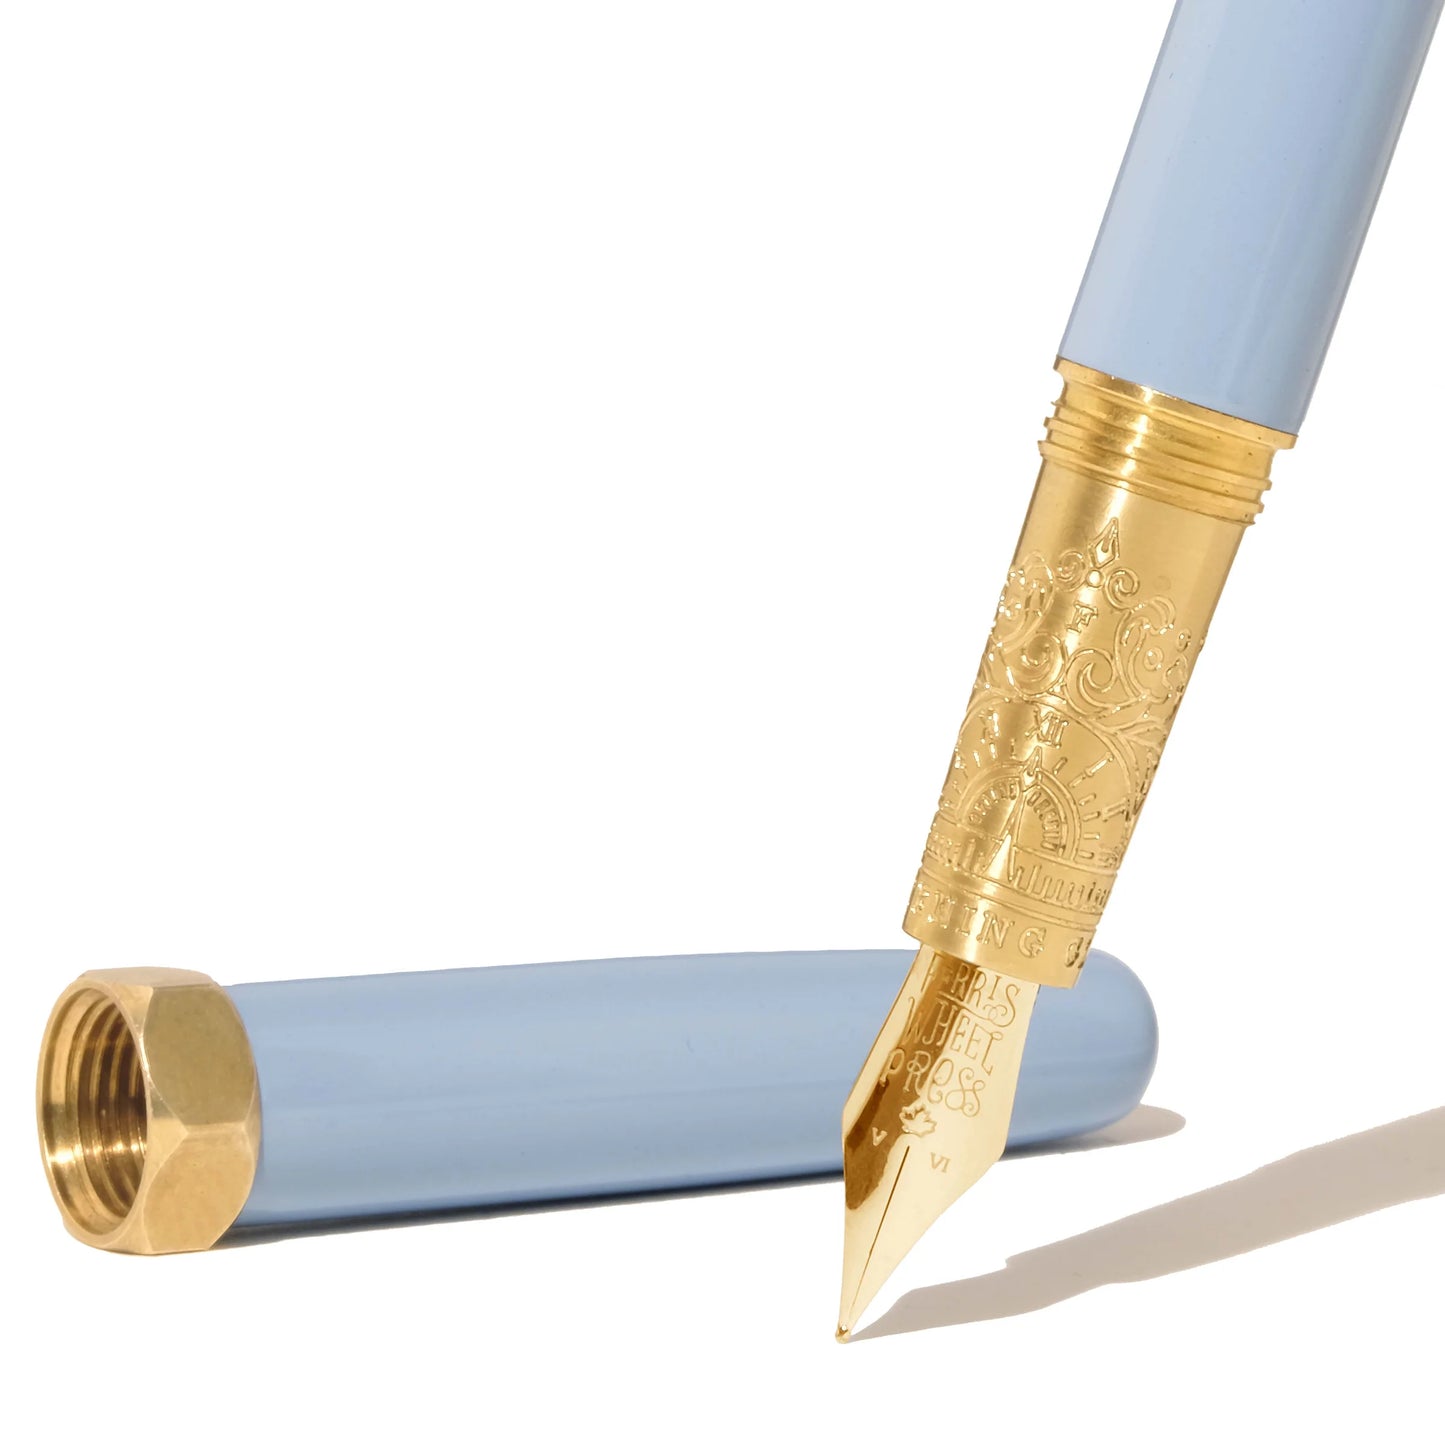 Ferris Wheel Press - Glistening Glass Gold Brush Fountain Pen - Limited Edition